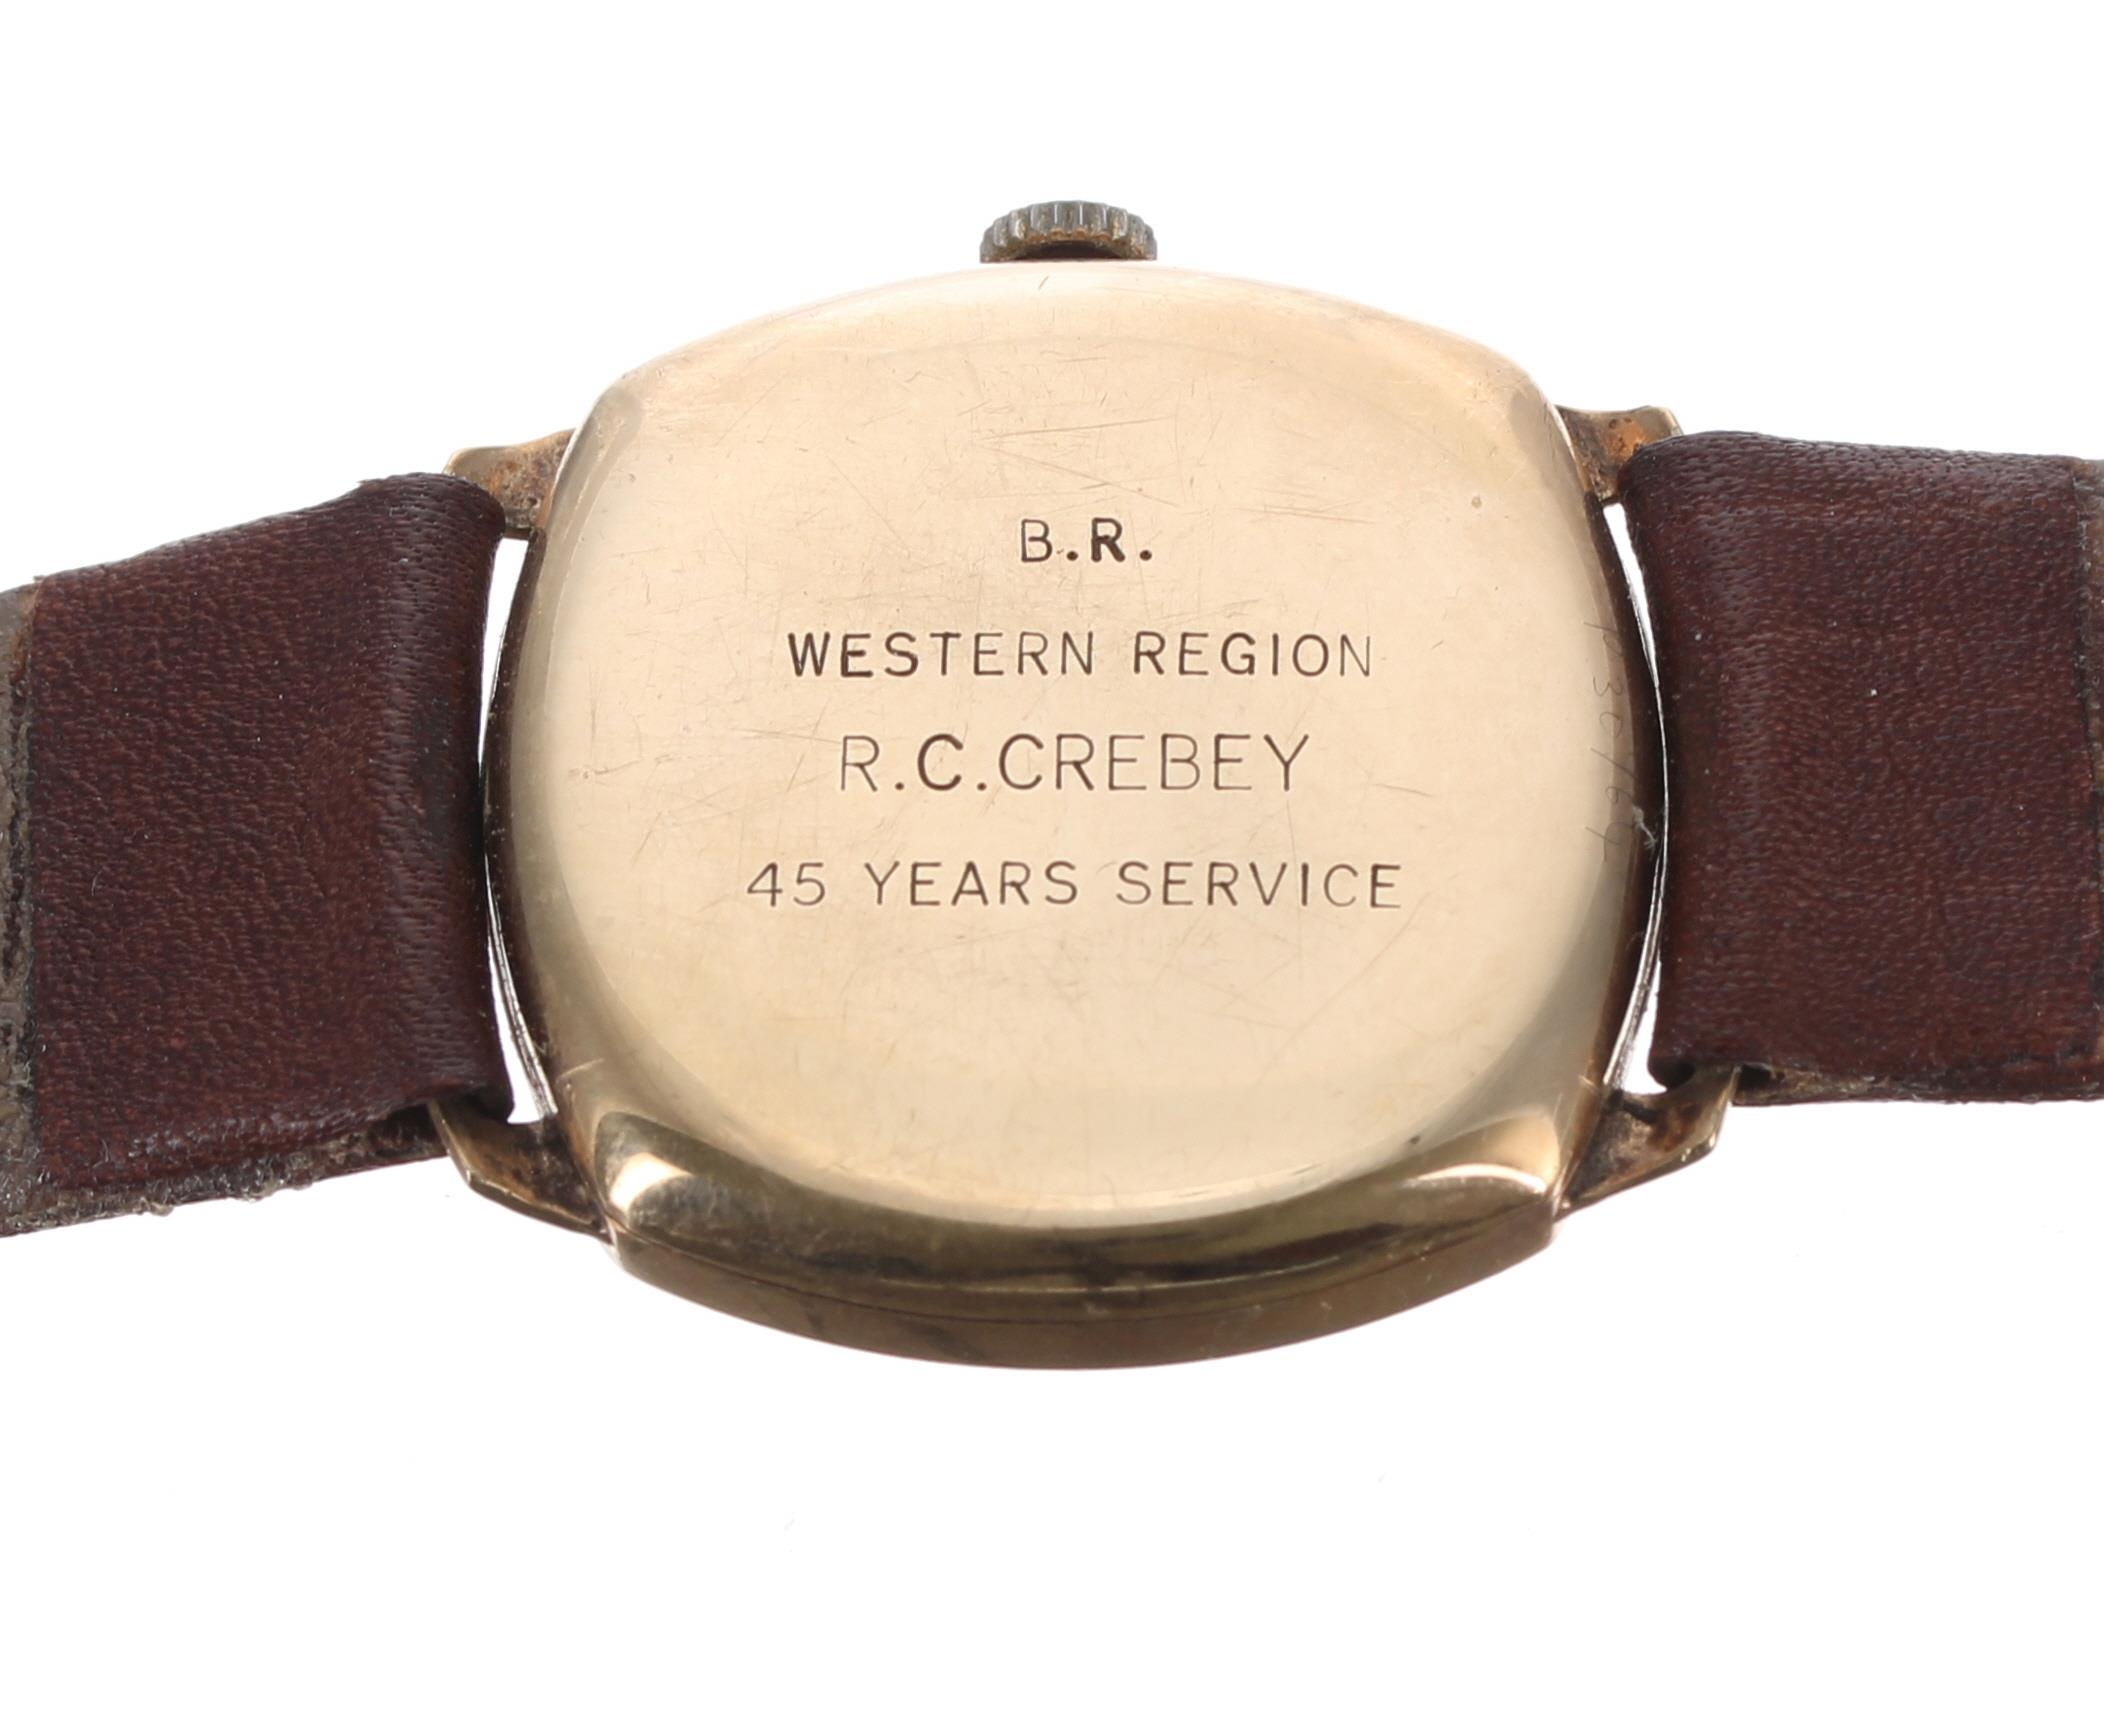 Garrard 9ct cushion case gentleman's wristwatch, Birmingham 1957, the signed circular silvered - Image 3 of 4